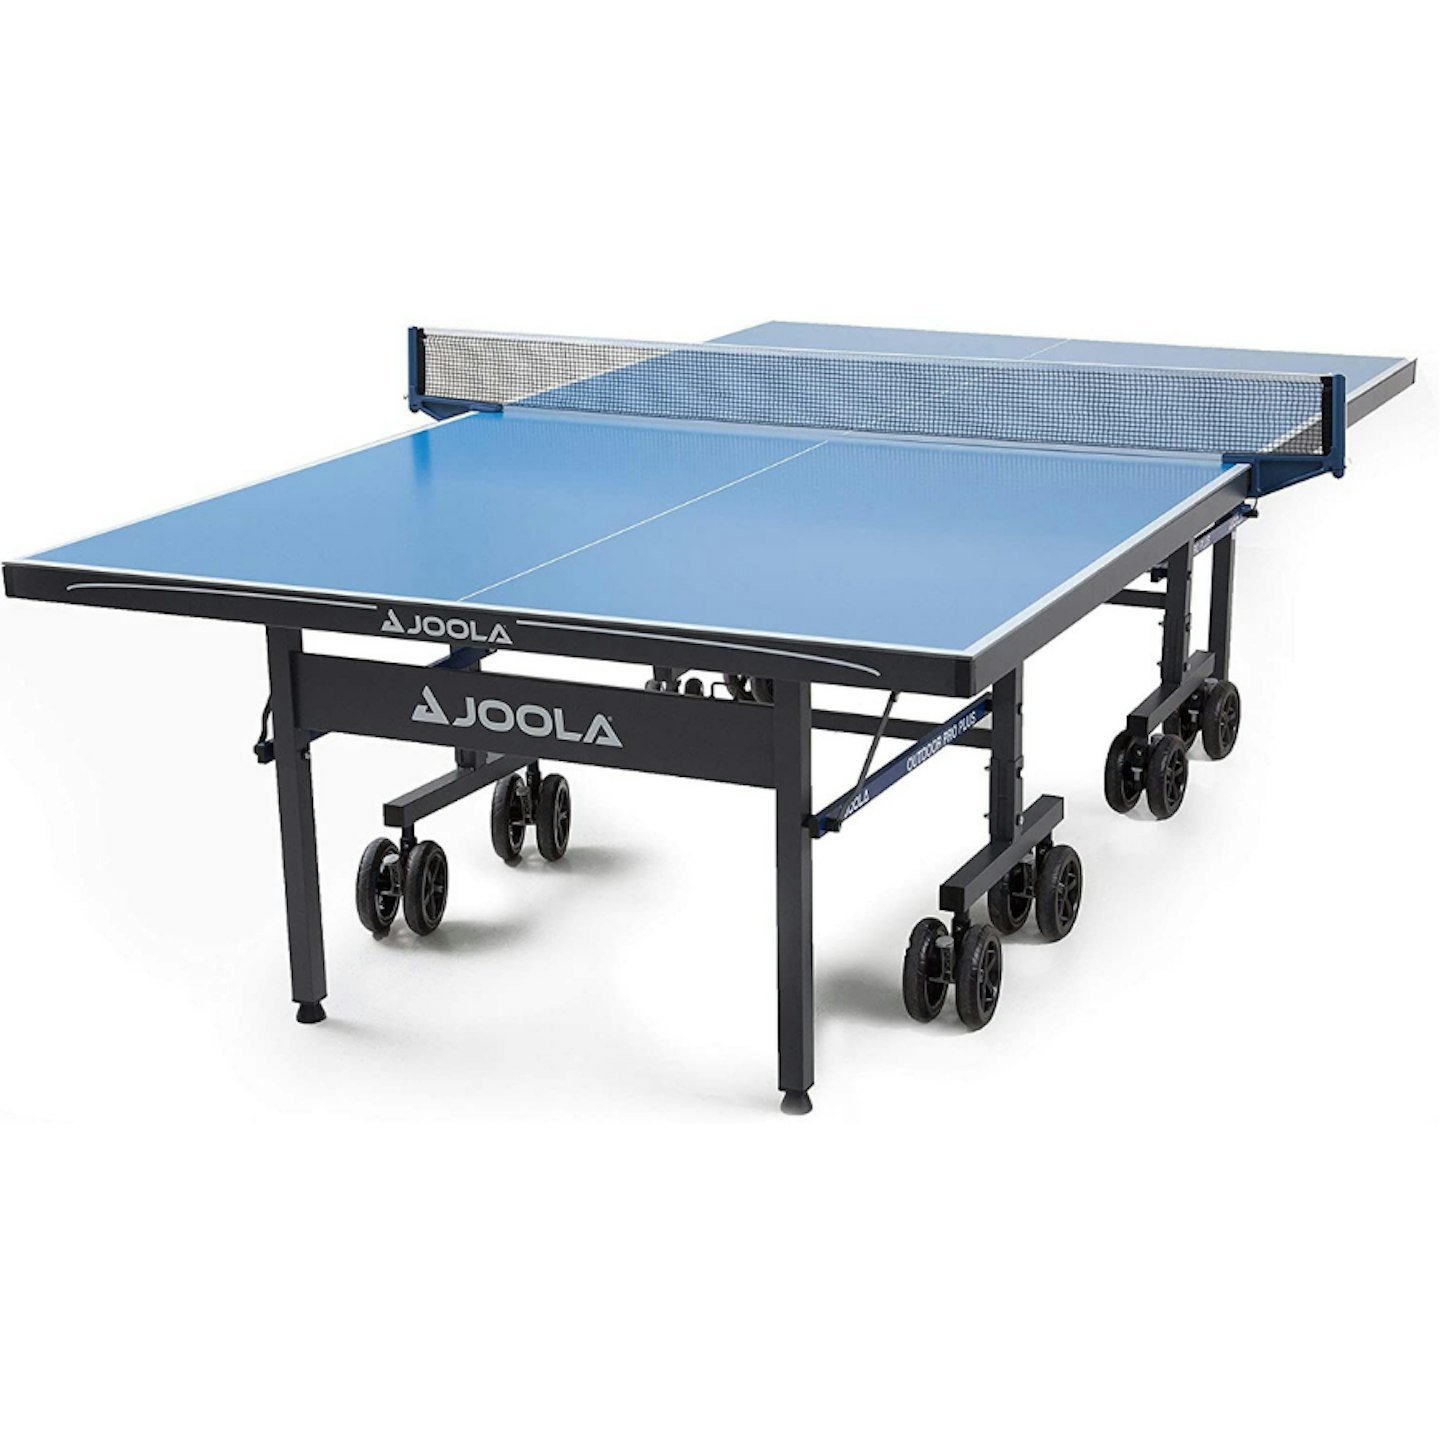 JOOLA NOVA -  Outdoor Table Tennis Table with Waterproof Net Set